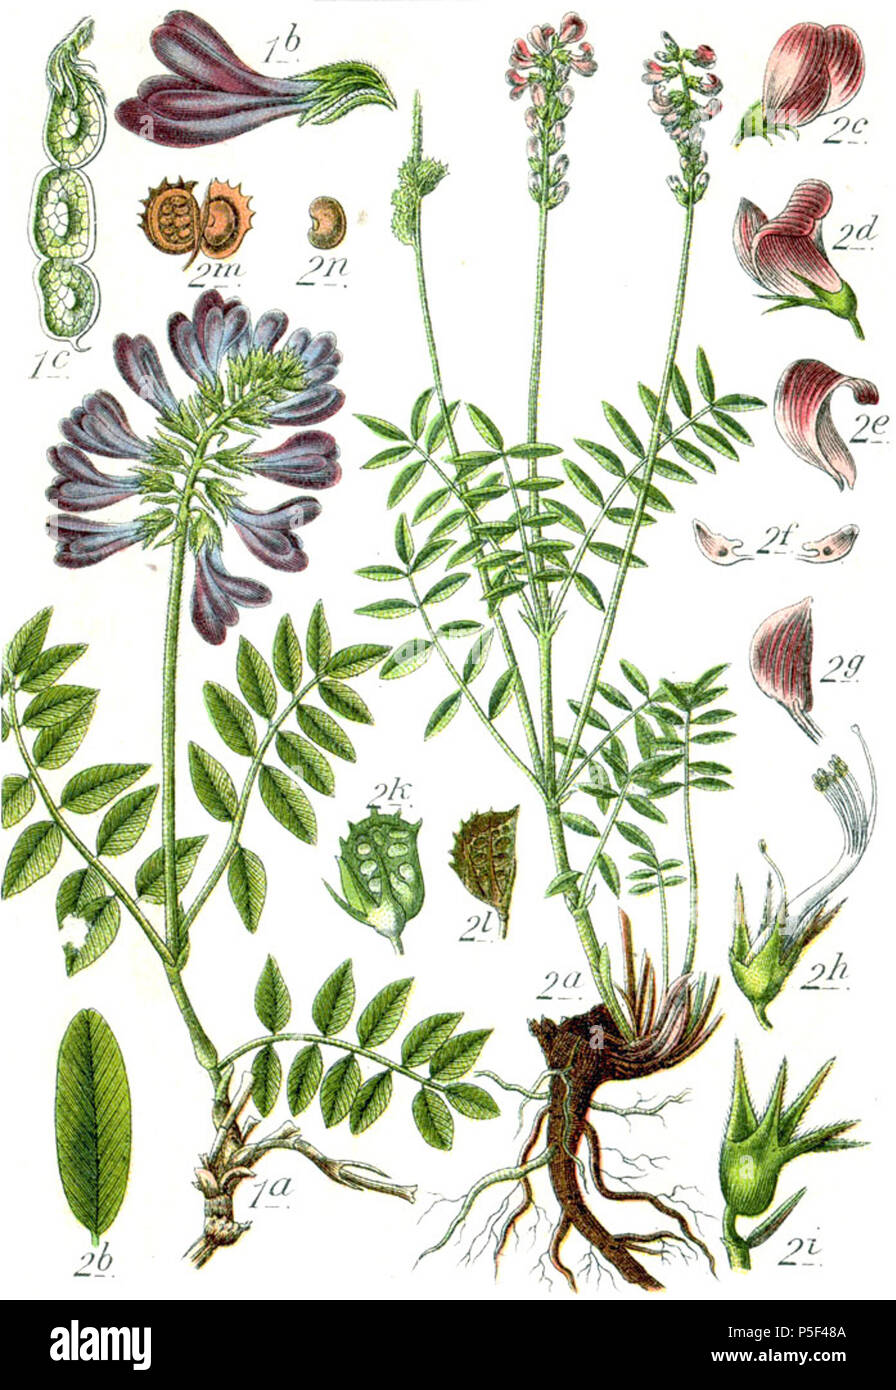 N/A. 1: Hedysarum hedysaroides (L.) Schinz & Thell. subsp. hedysaroides, syn. Hedysarum obscurum L. , nom. illeg. 2: Onobrychis viciifolia Scop., syn. Hedysarum onobrychis L. Original Caption 1. Süssklee, Hedysarum obscurum 2. Esparette, H. onobrychis . 1796. Johann Georg Sturm (Painter: Jacob Sturm) 544 Faboideae spp Sturm25 Stock Photo